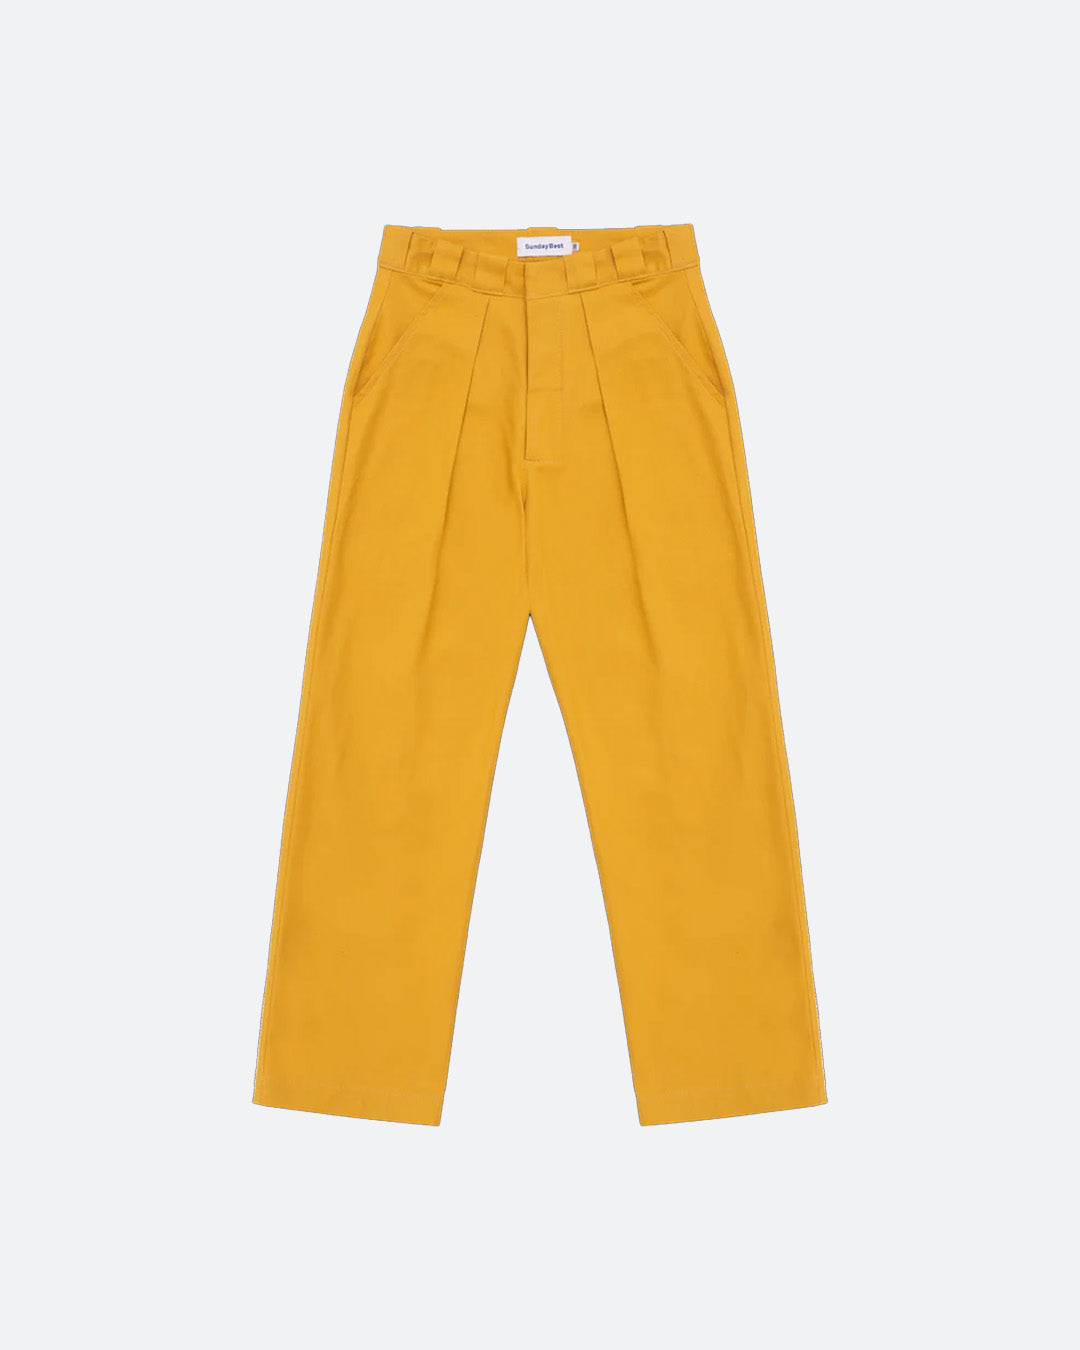 Twill Yellow Pants